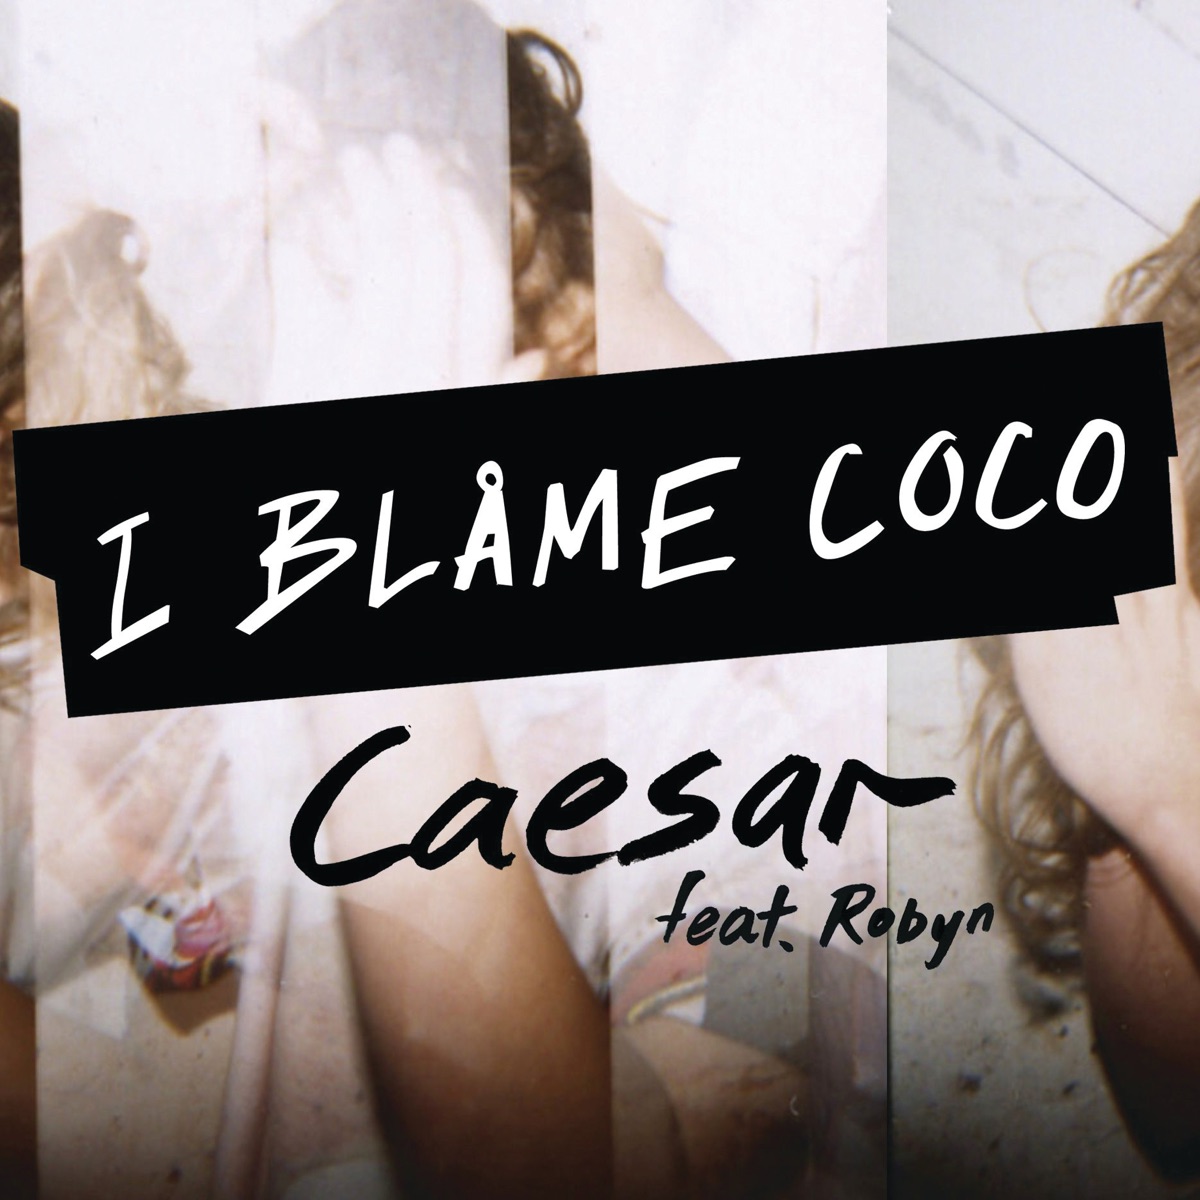 I Blame Coco featuring Robyn — Caesar cover artwork